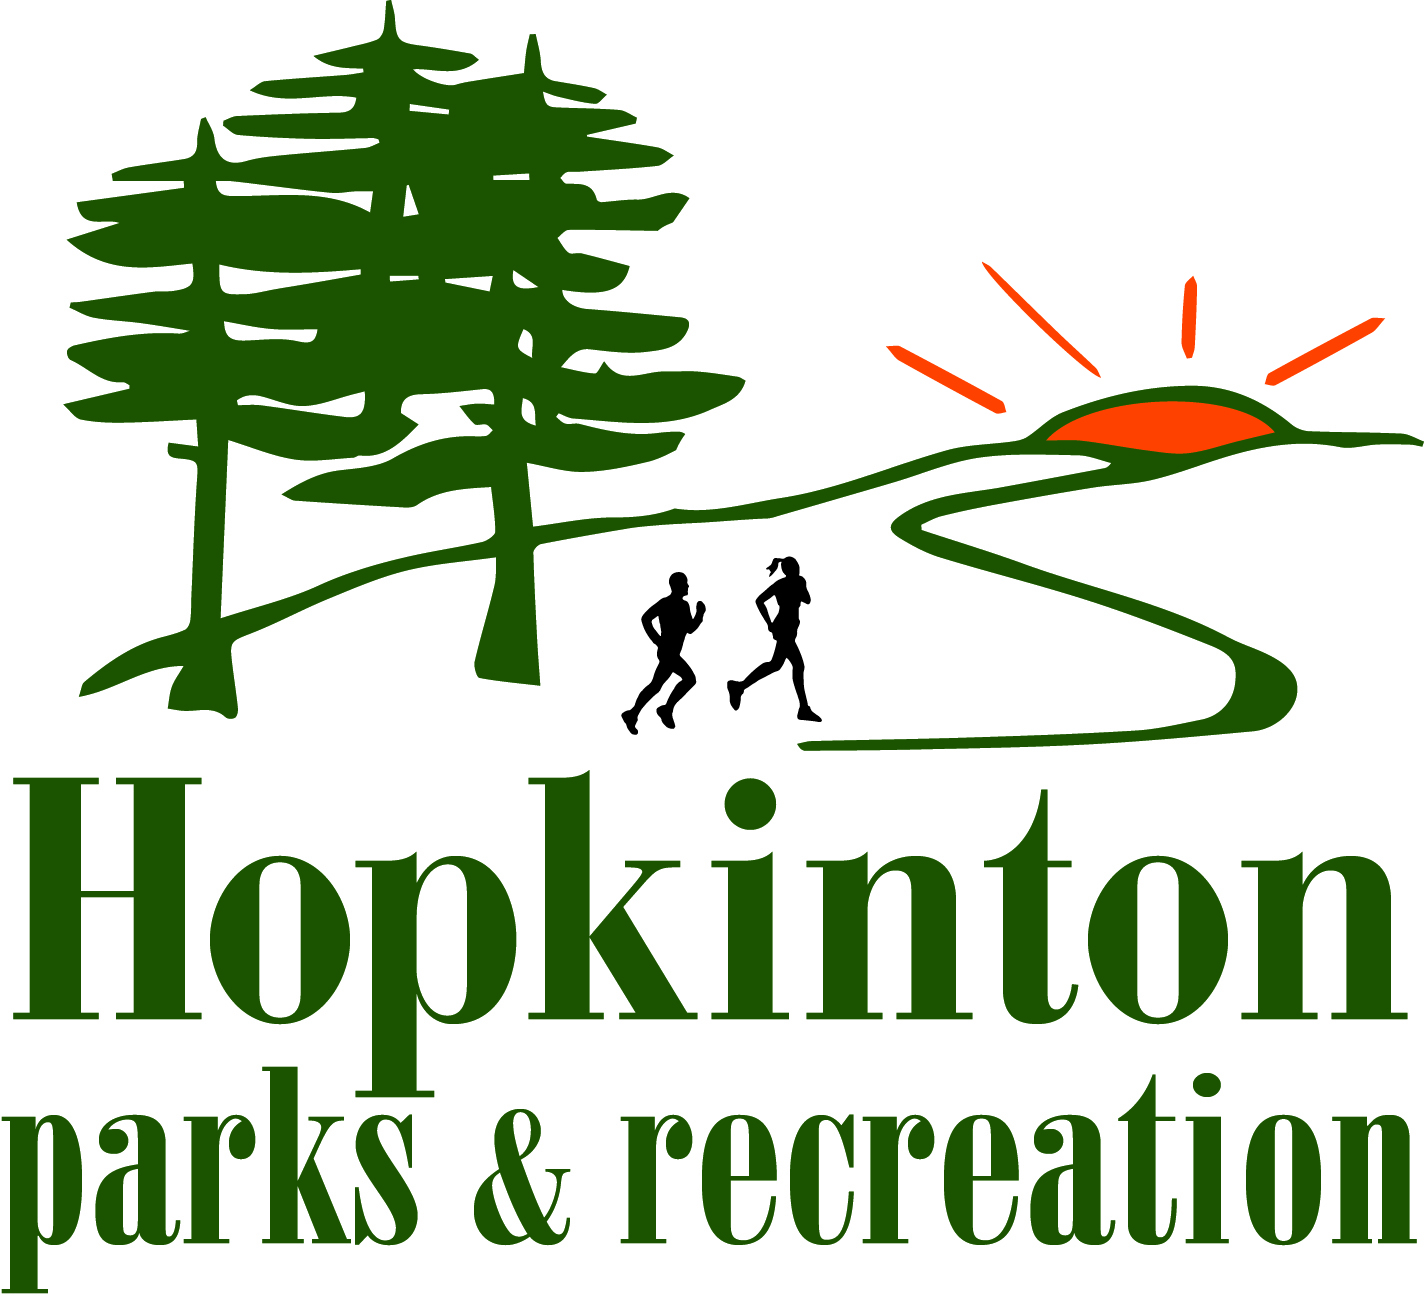 Summer Fun Business Profile: Parks & Recreation offers ‘uniquely Hopkinton’ summer